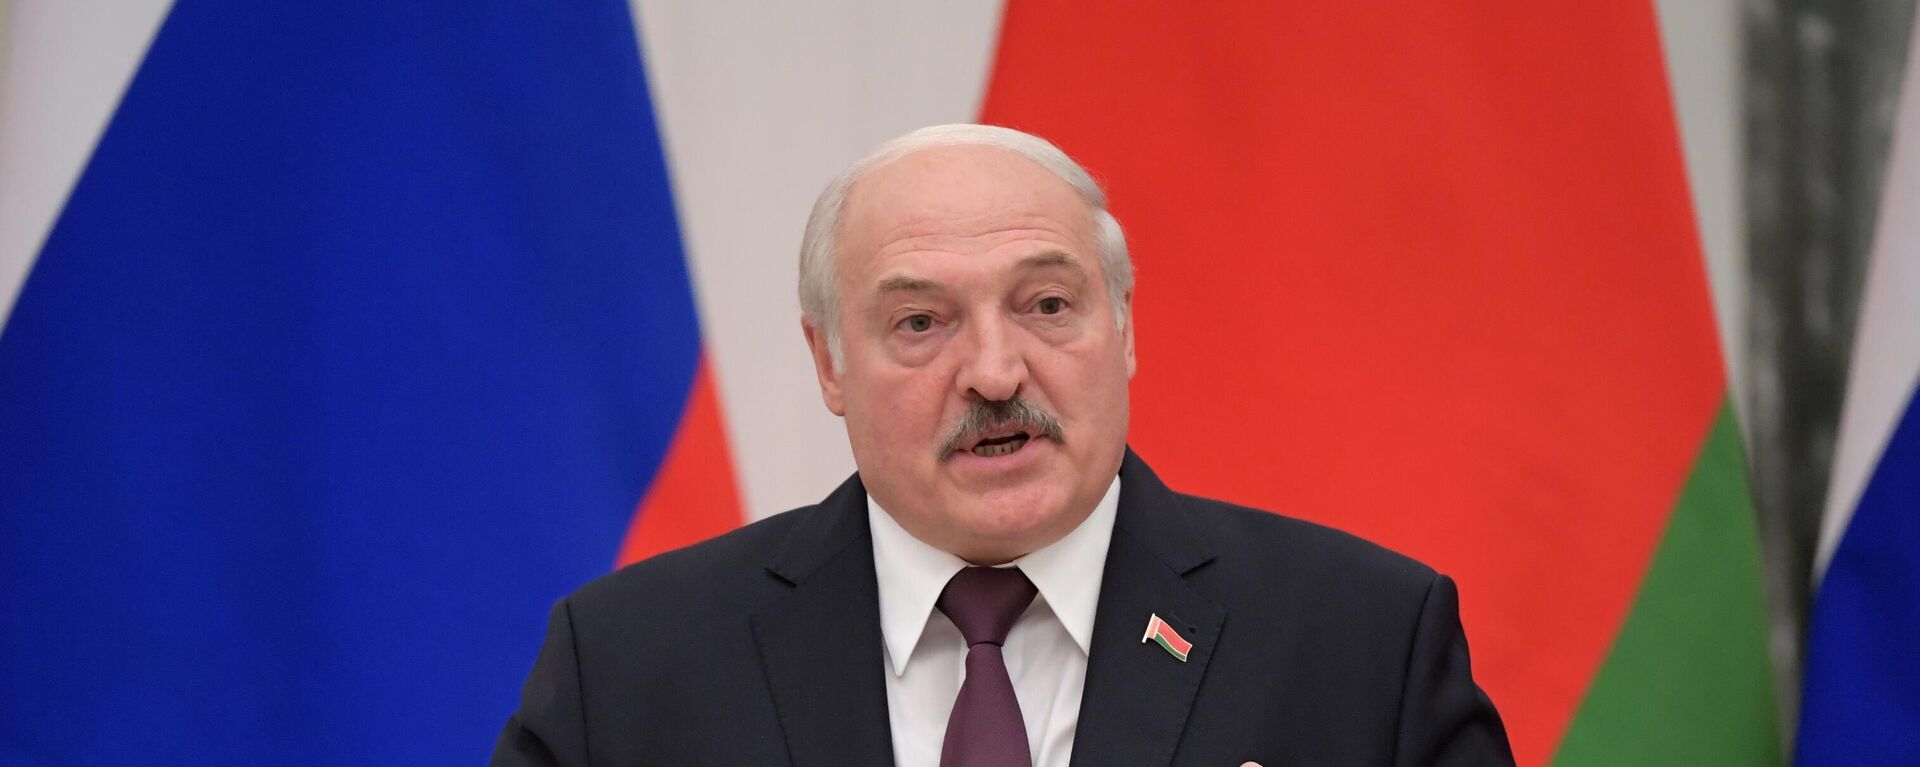 Президент Беларуси Александр Лукашенко - Sputnik Таджикистан, 1920, 12.11.2021